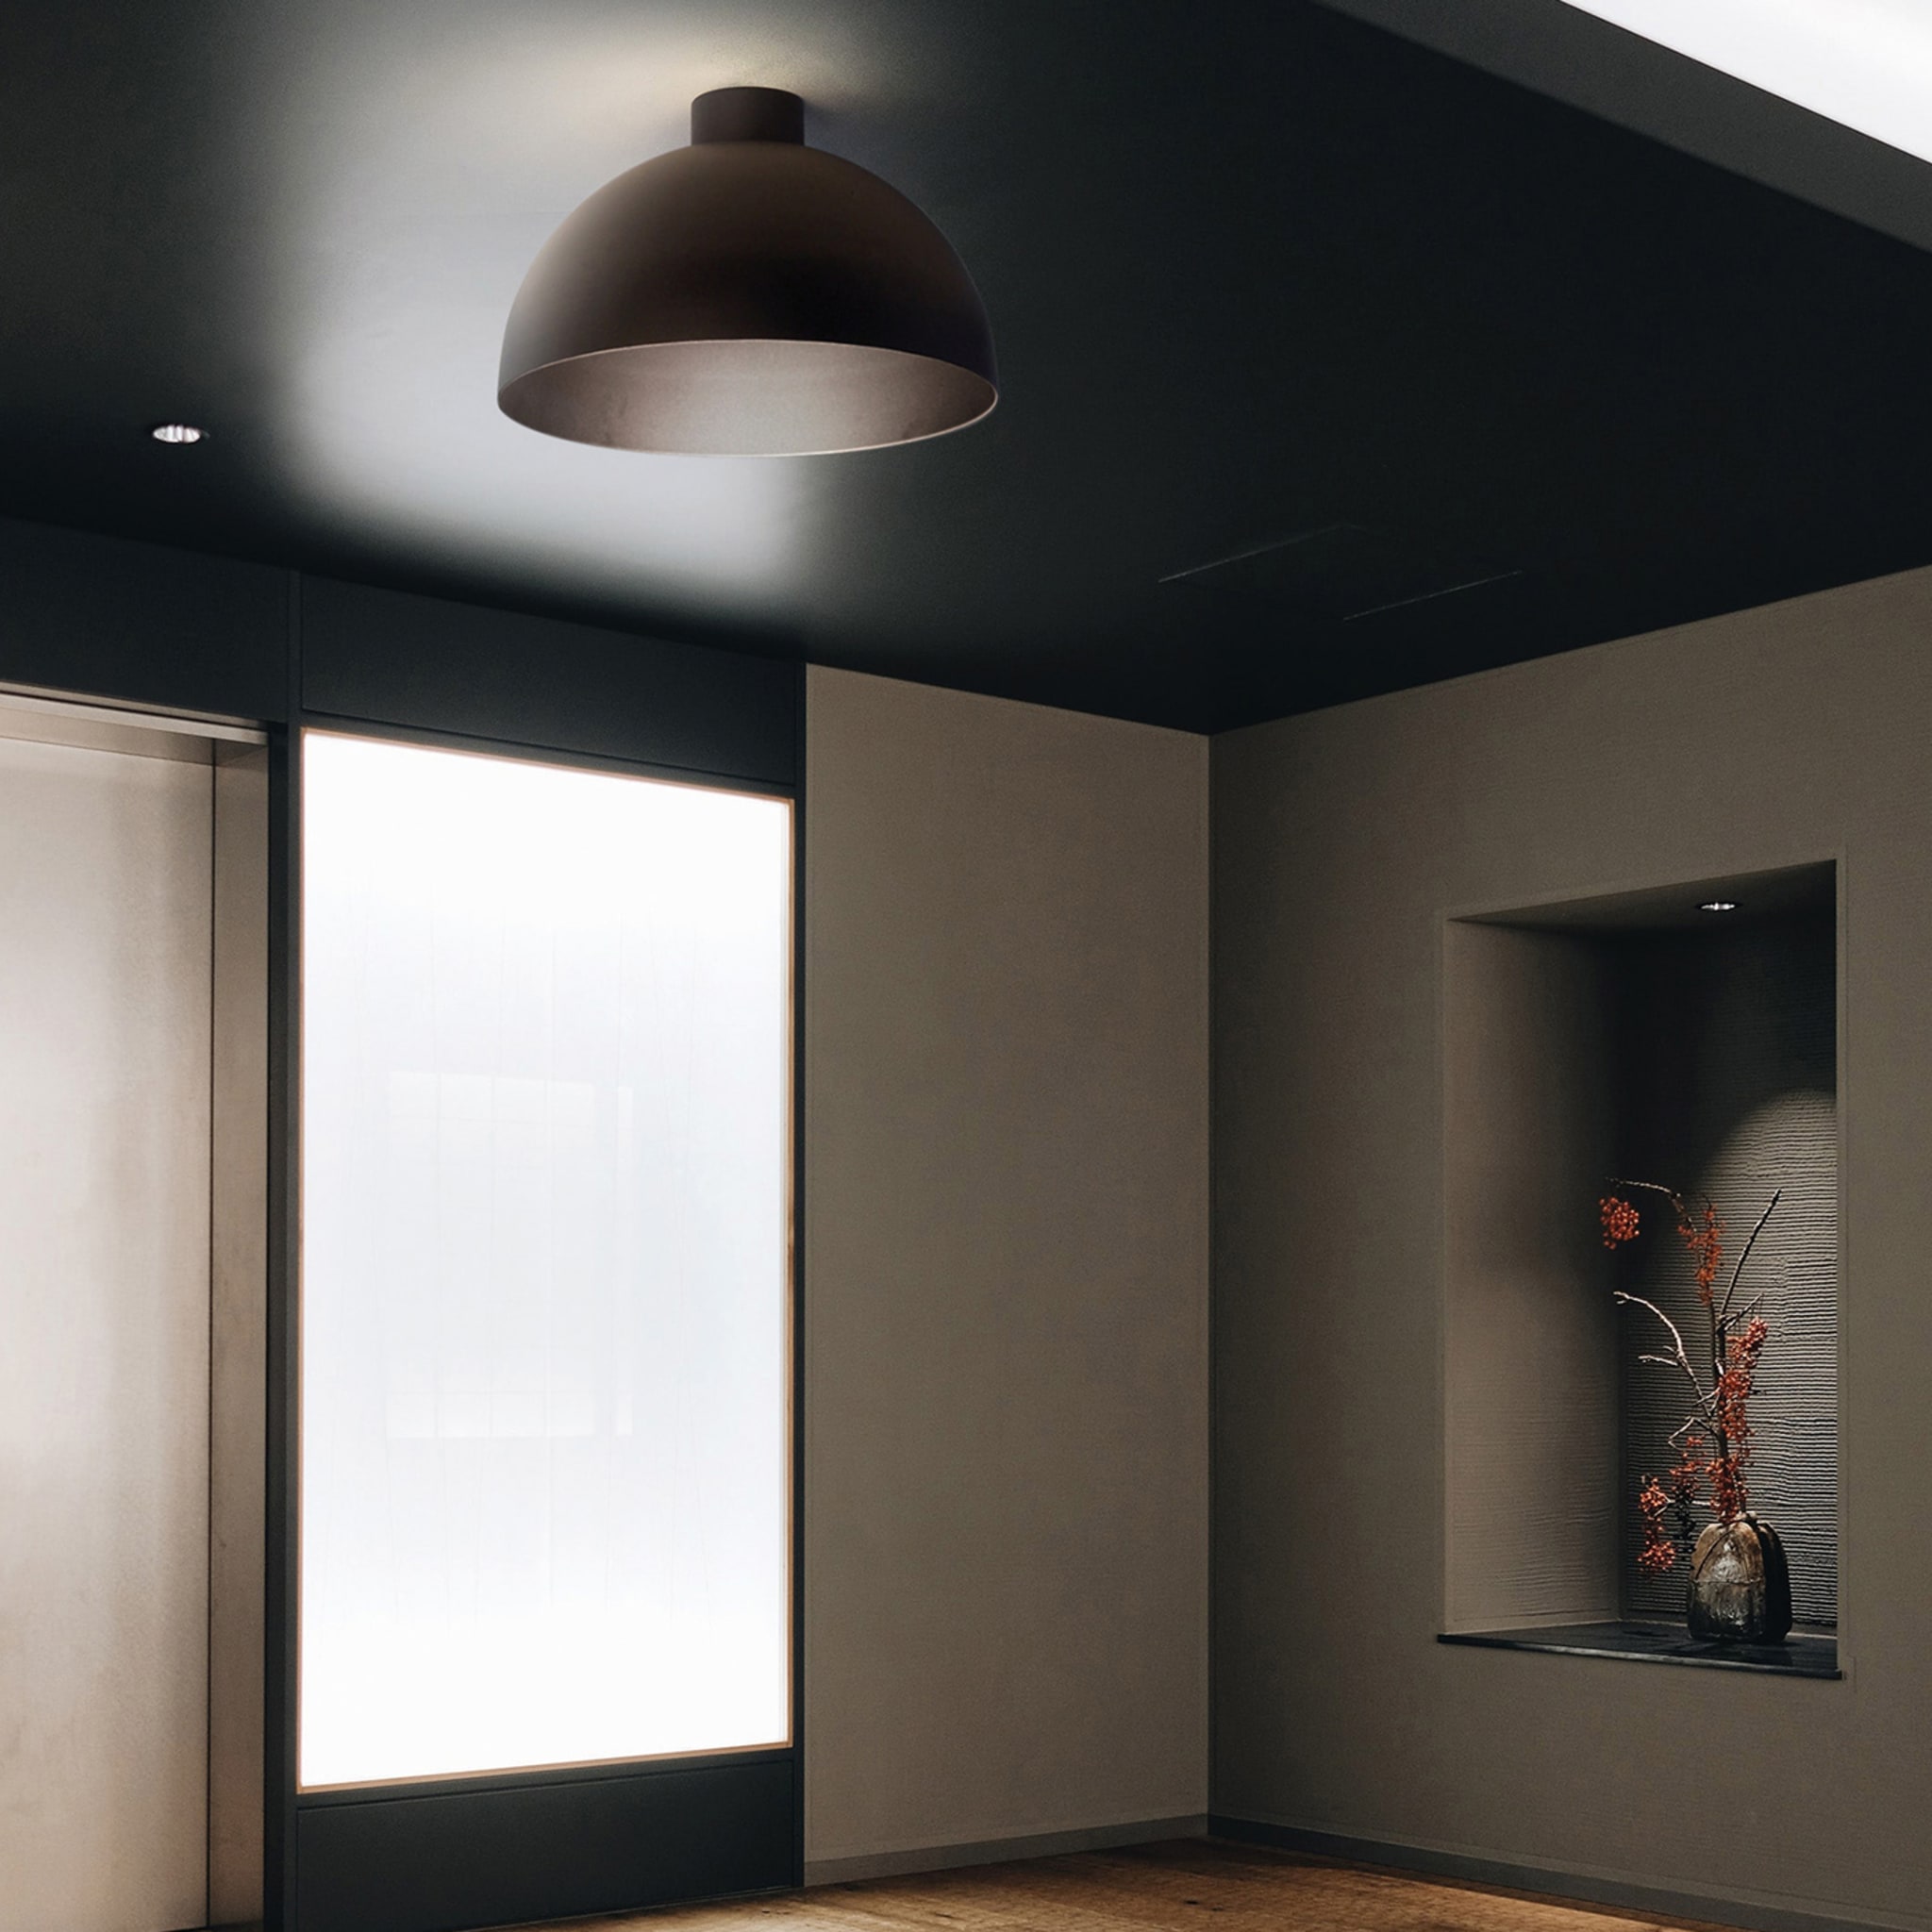 Giove Black Ceiling Lamp - Alternative view 1